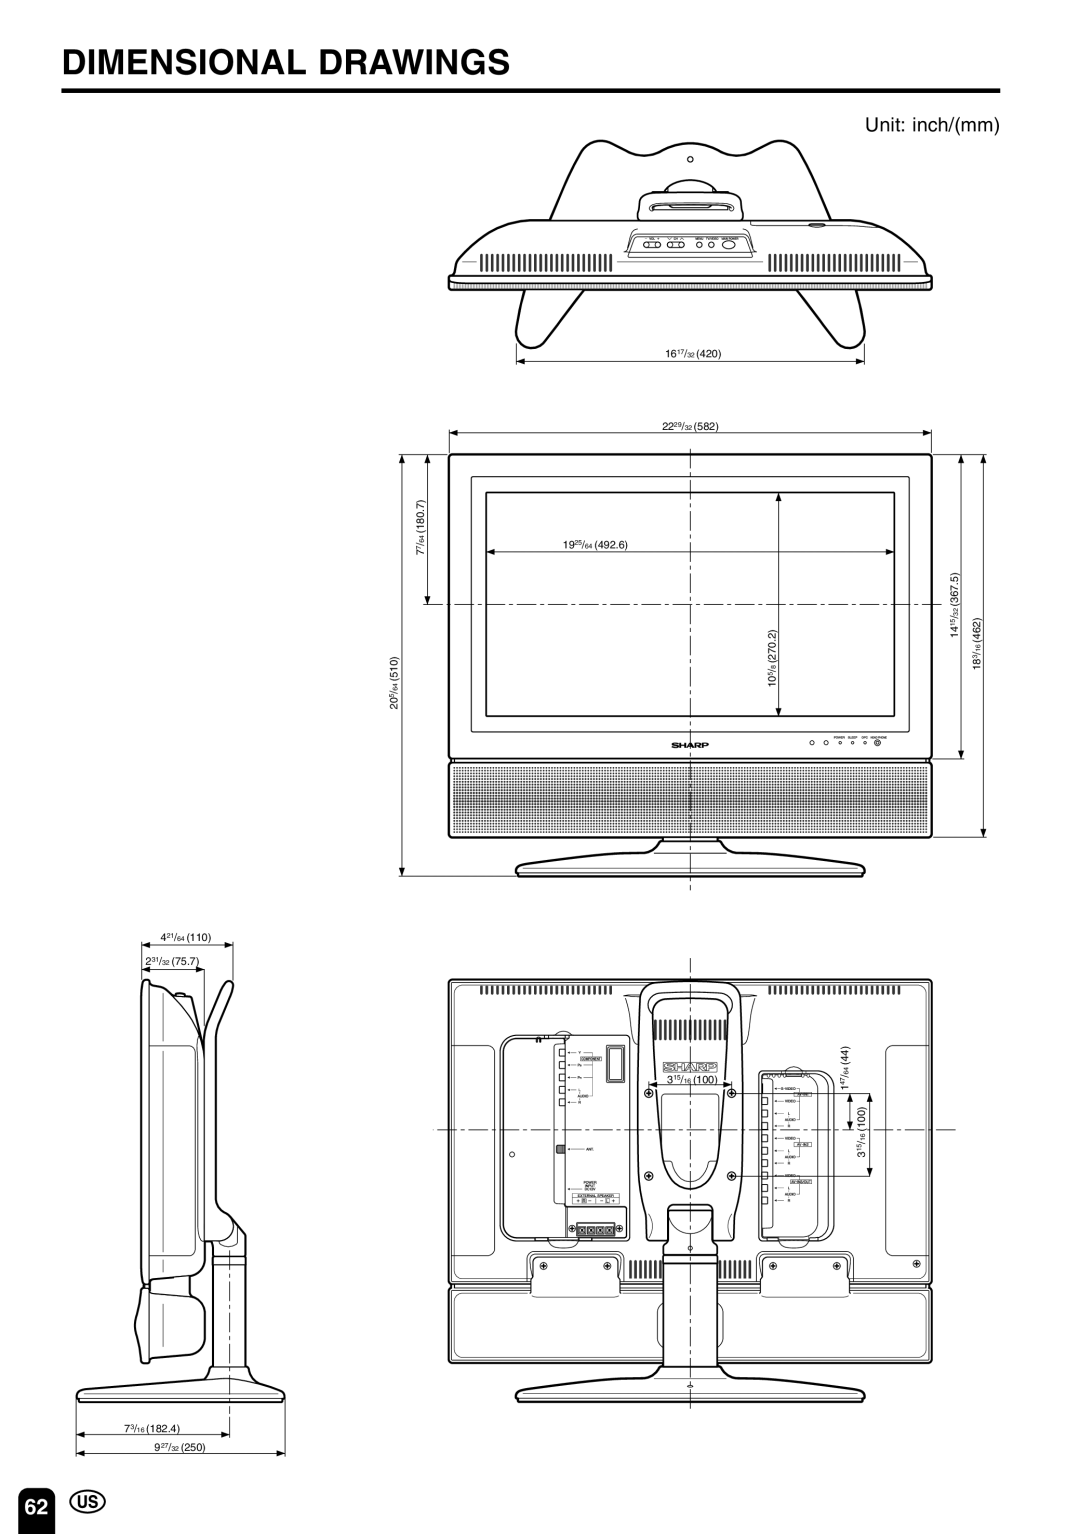 Sharp LC-22SV6U operation manual Dimensional Drawings, Unit inch/mm 